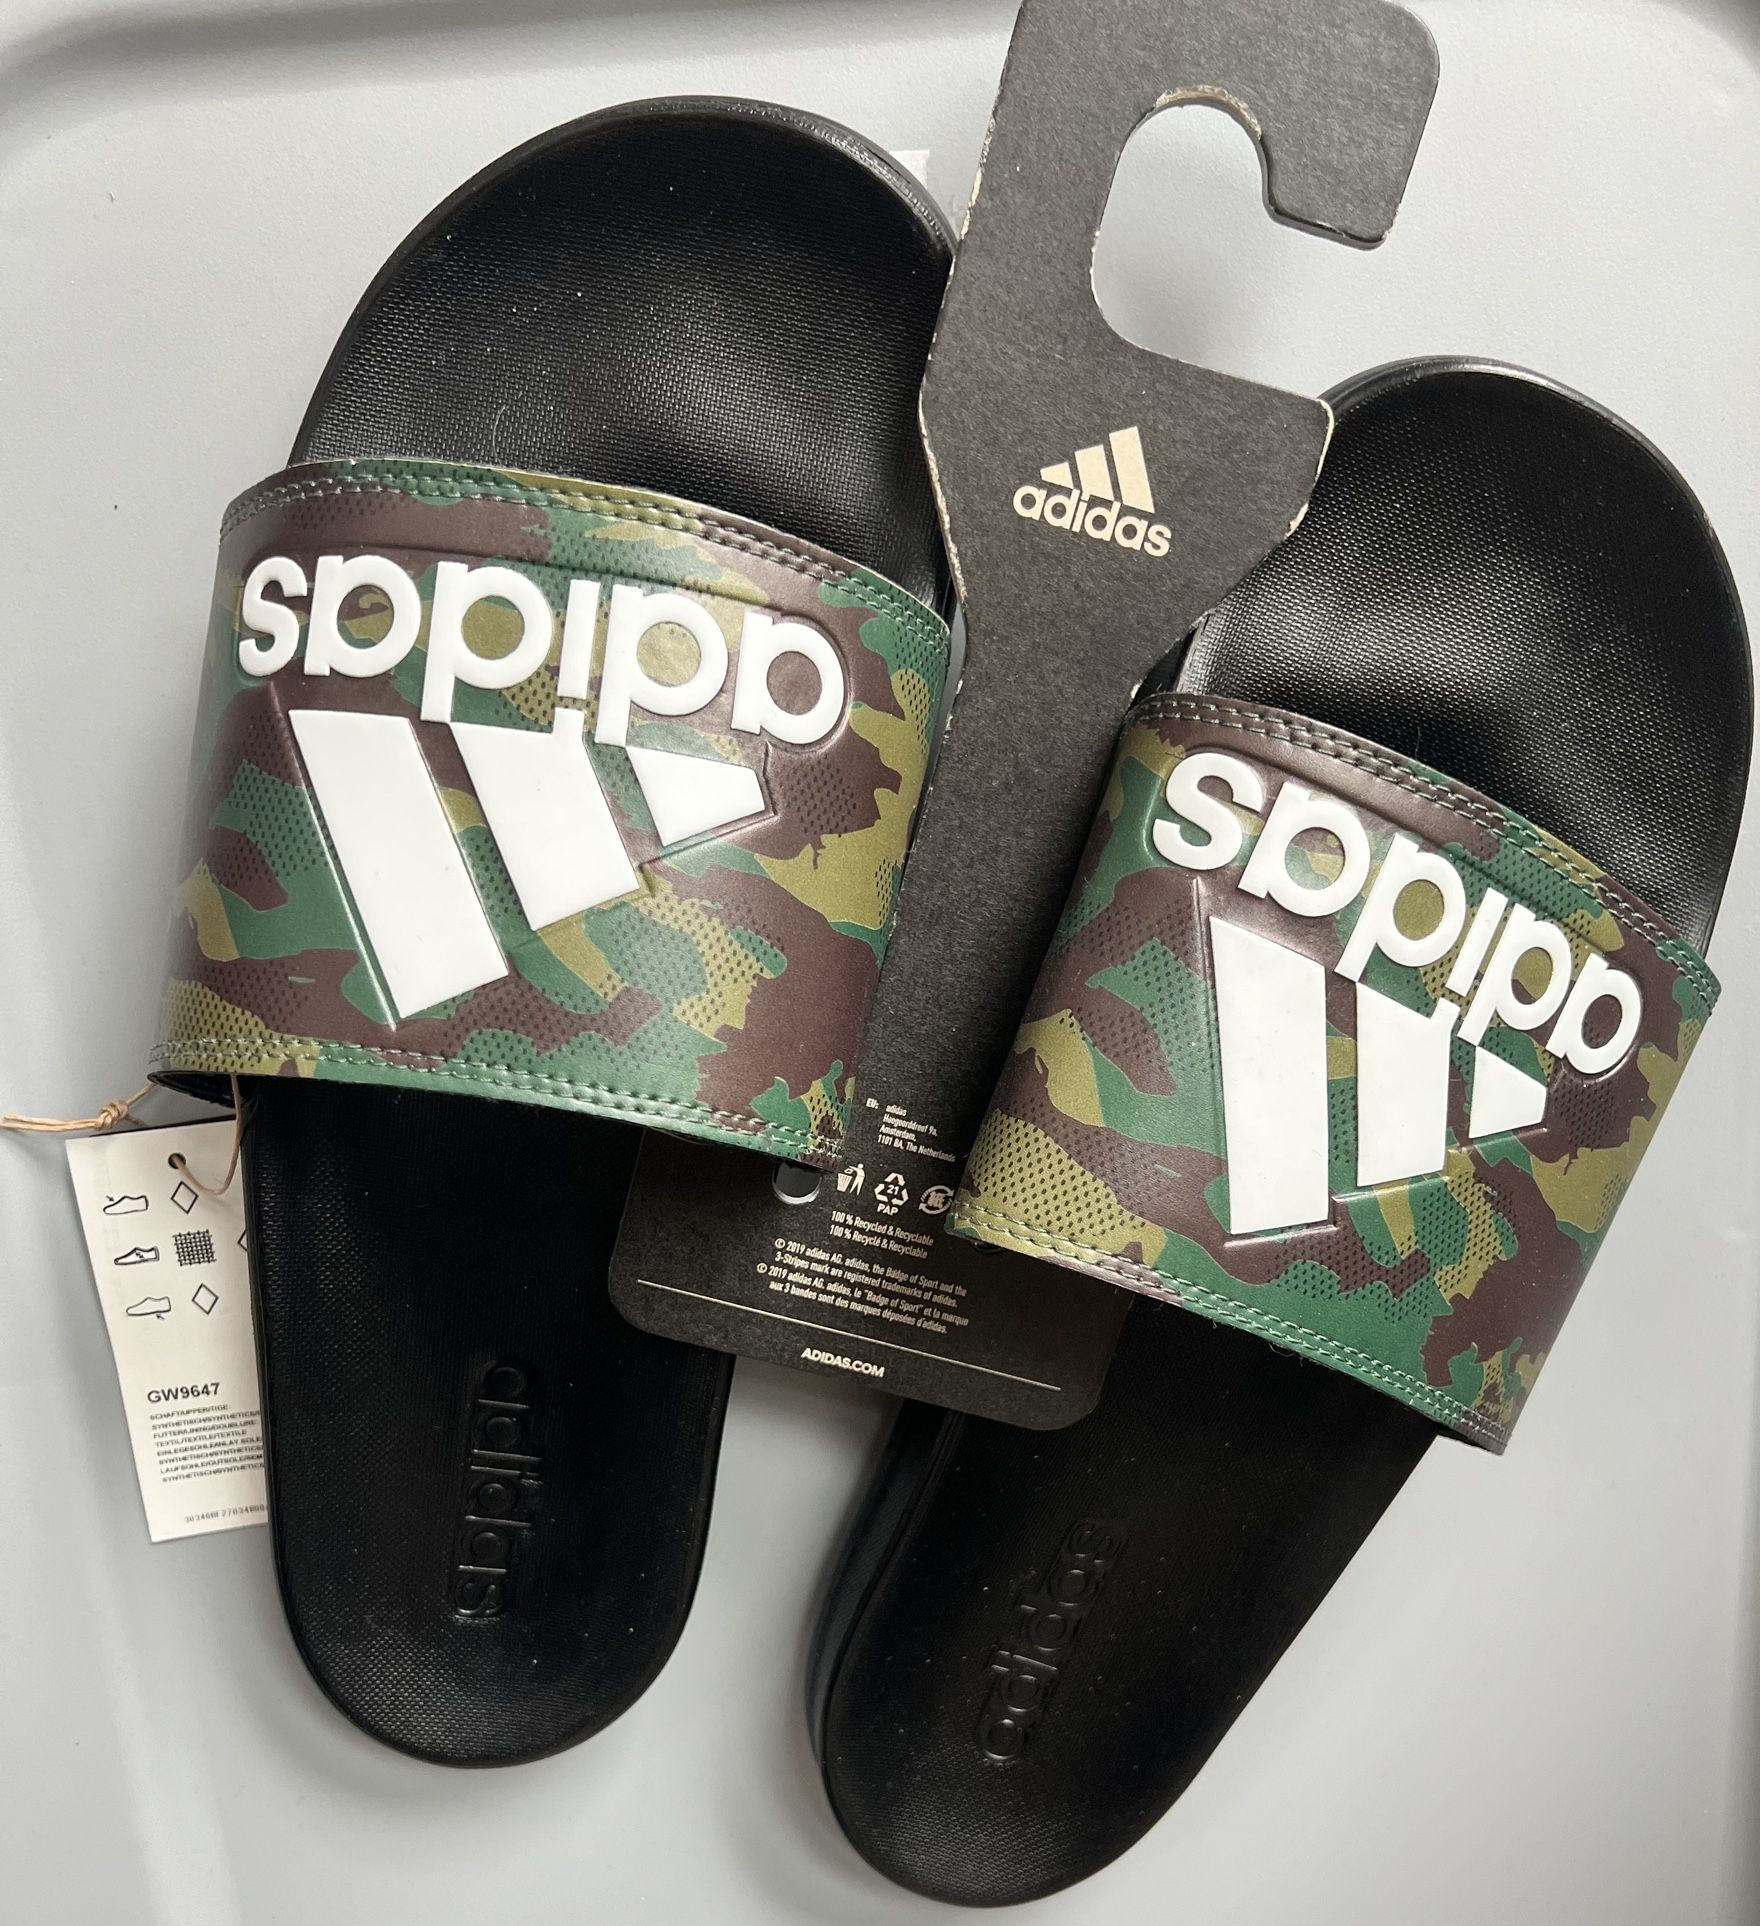 10 ADIDAS men’s Camo Slides Sandals NEW beach Pool Shower 